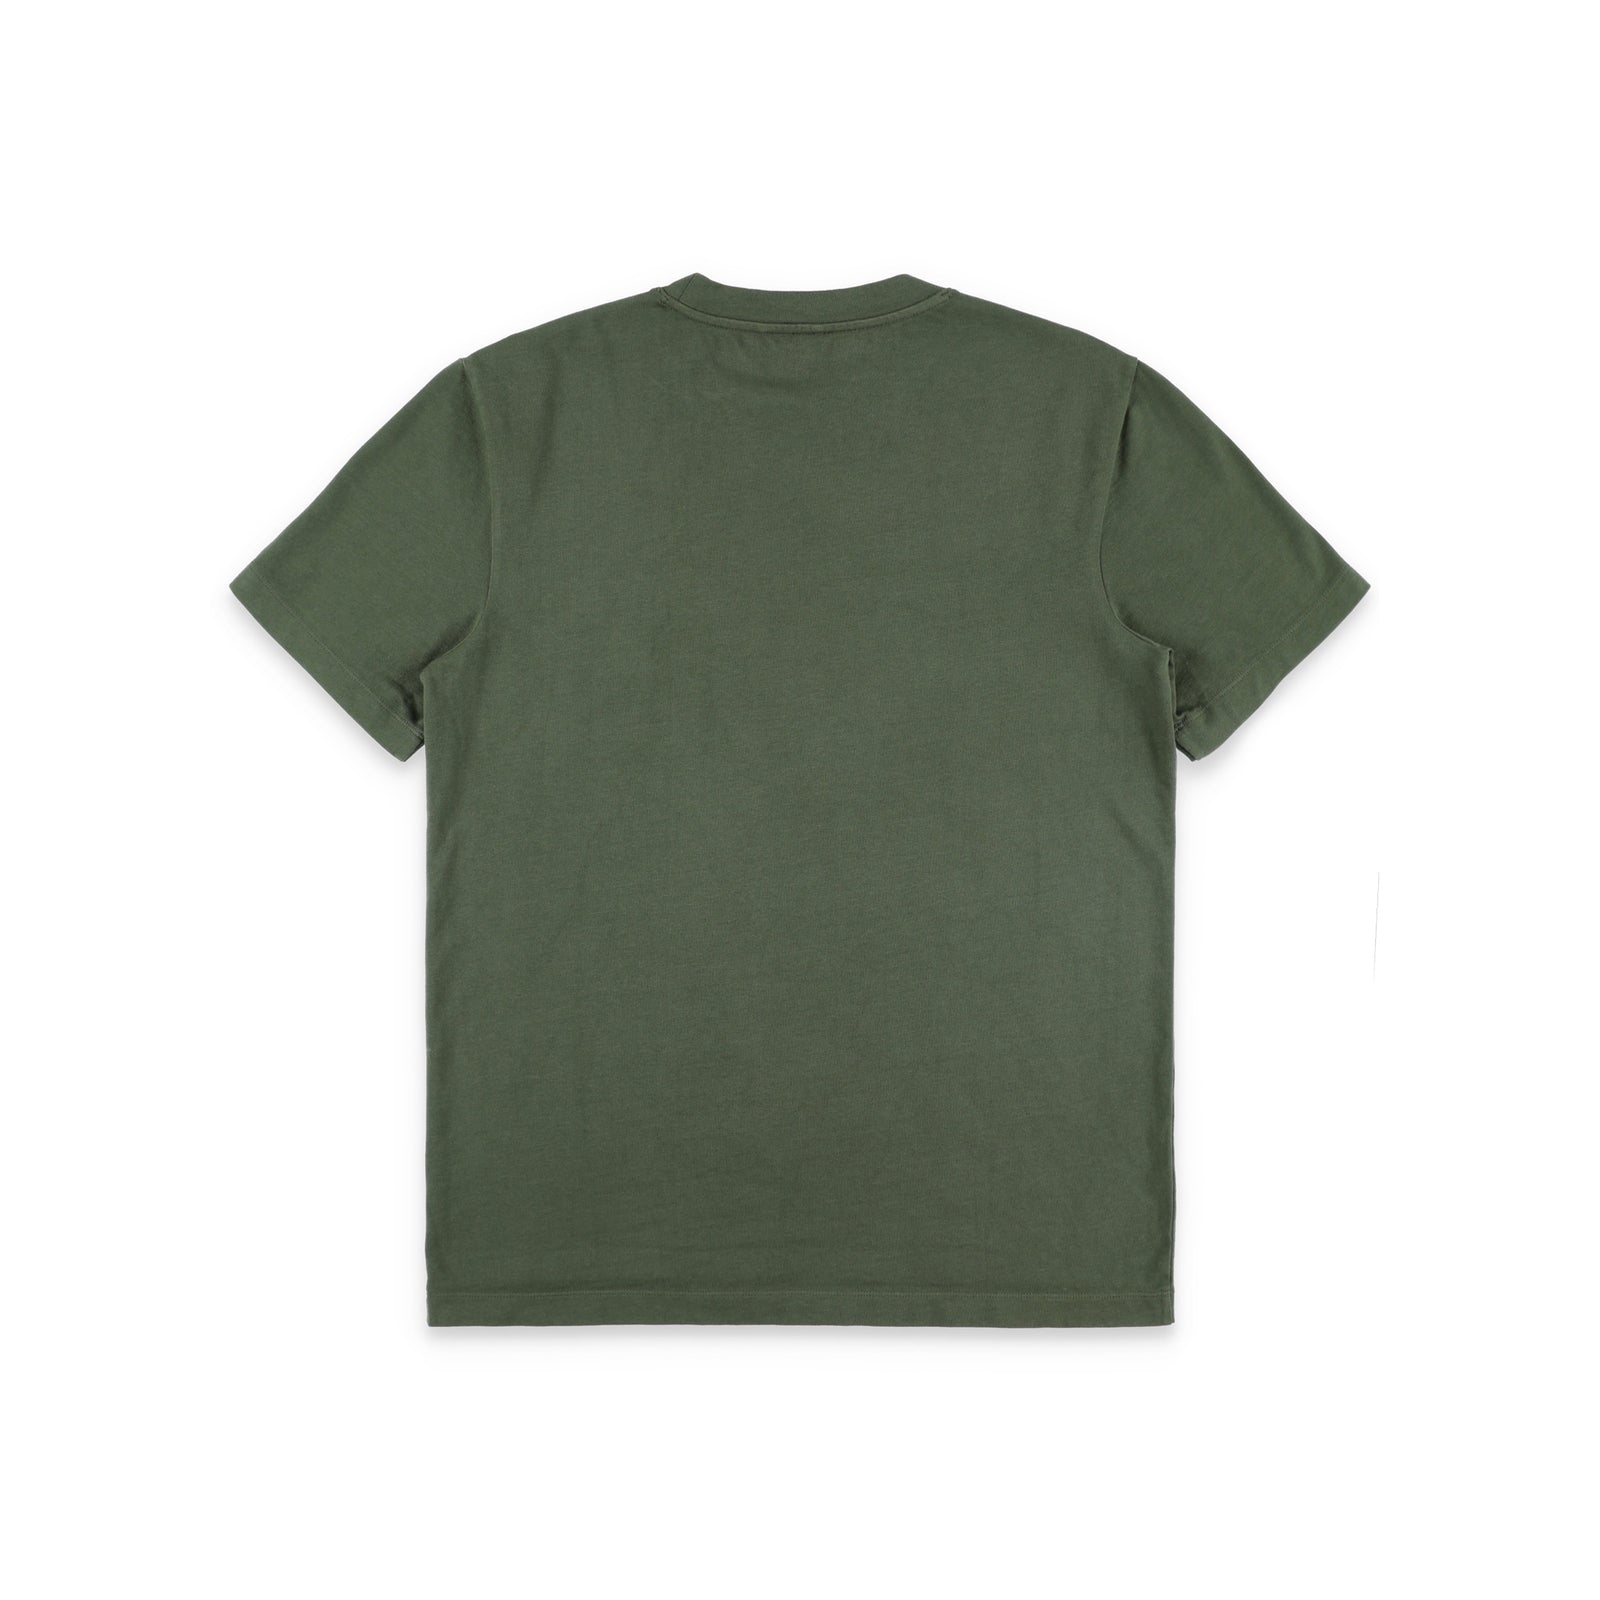 Back of Topo Designs Men's Dirt Pocket Tee 100% organic cotton short sleeve t-shirt in "olive" green